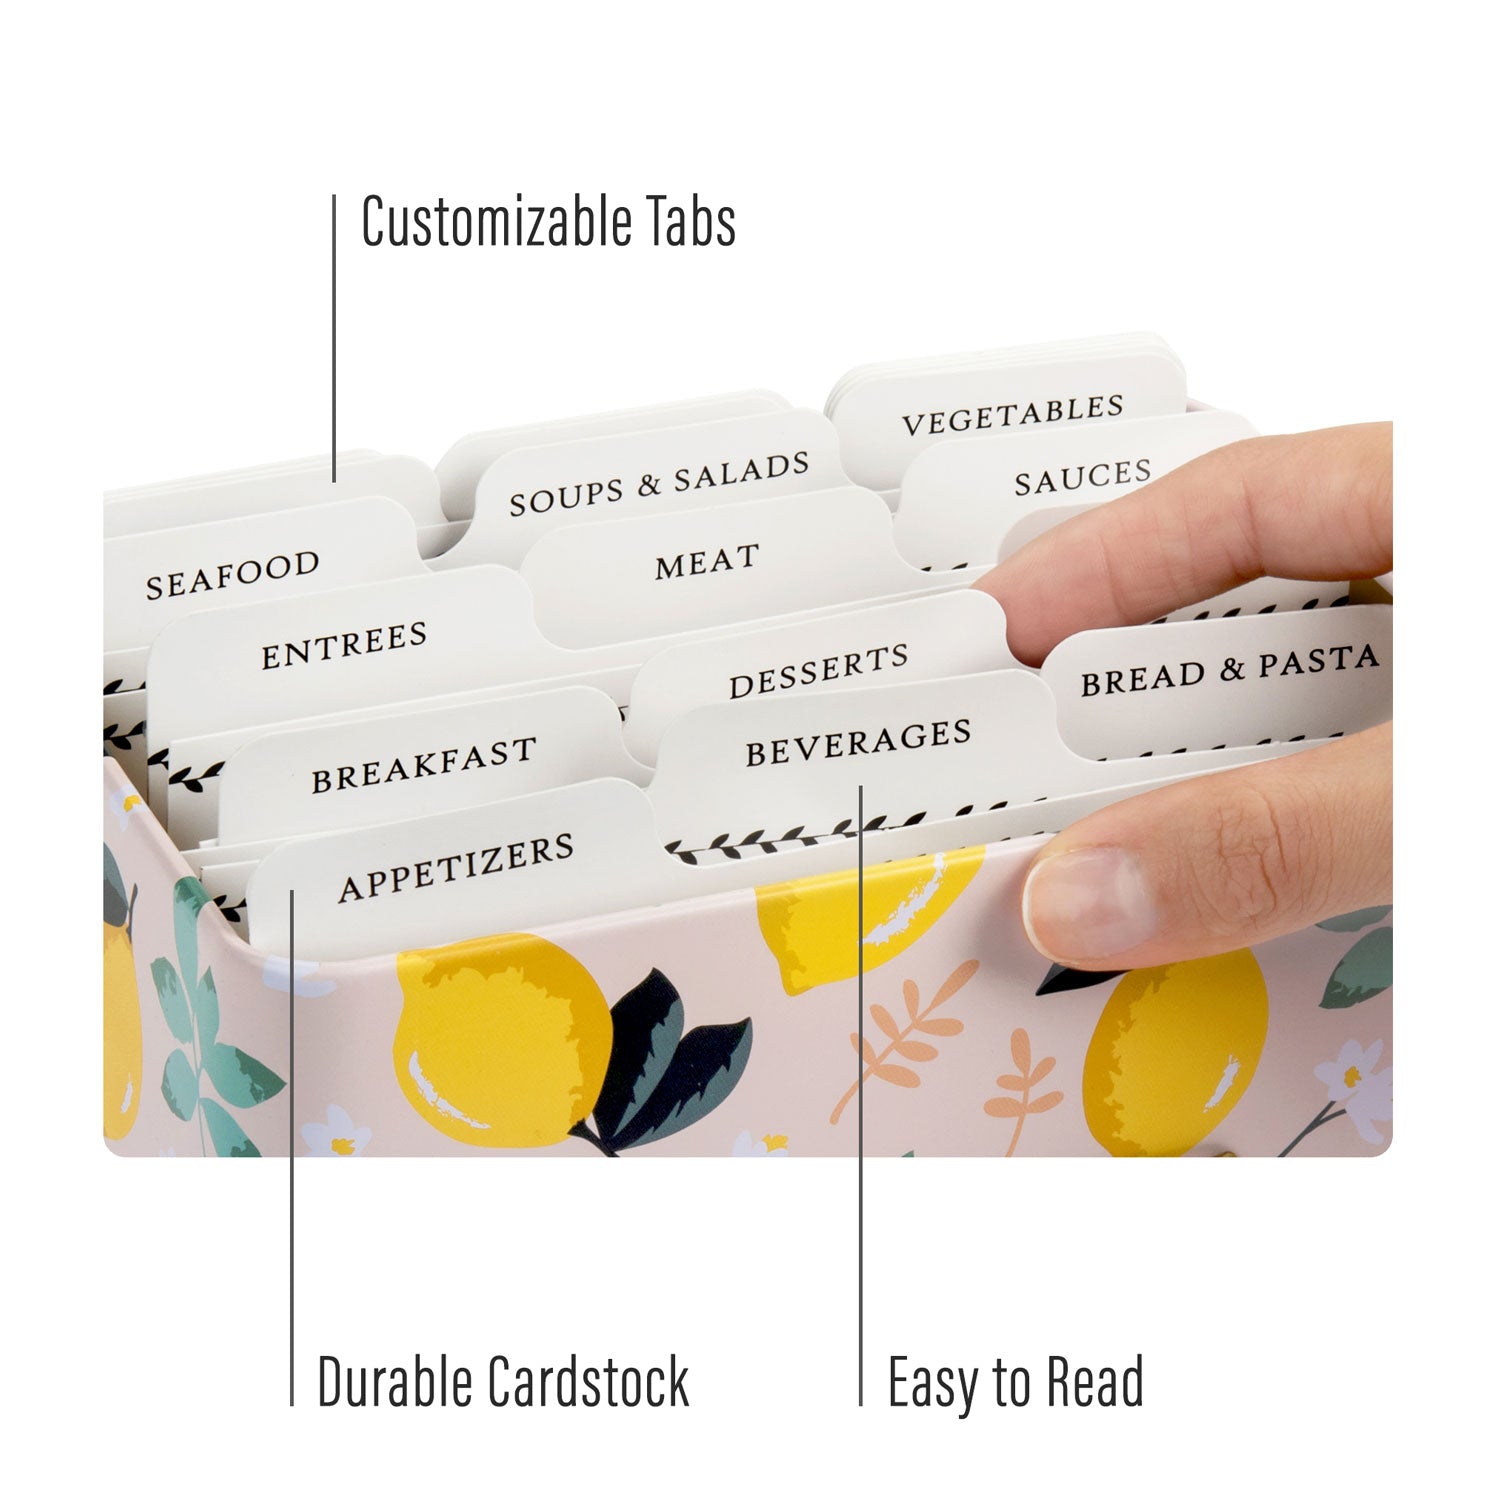 Recipe Card Dividers & Tabs